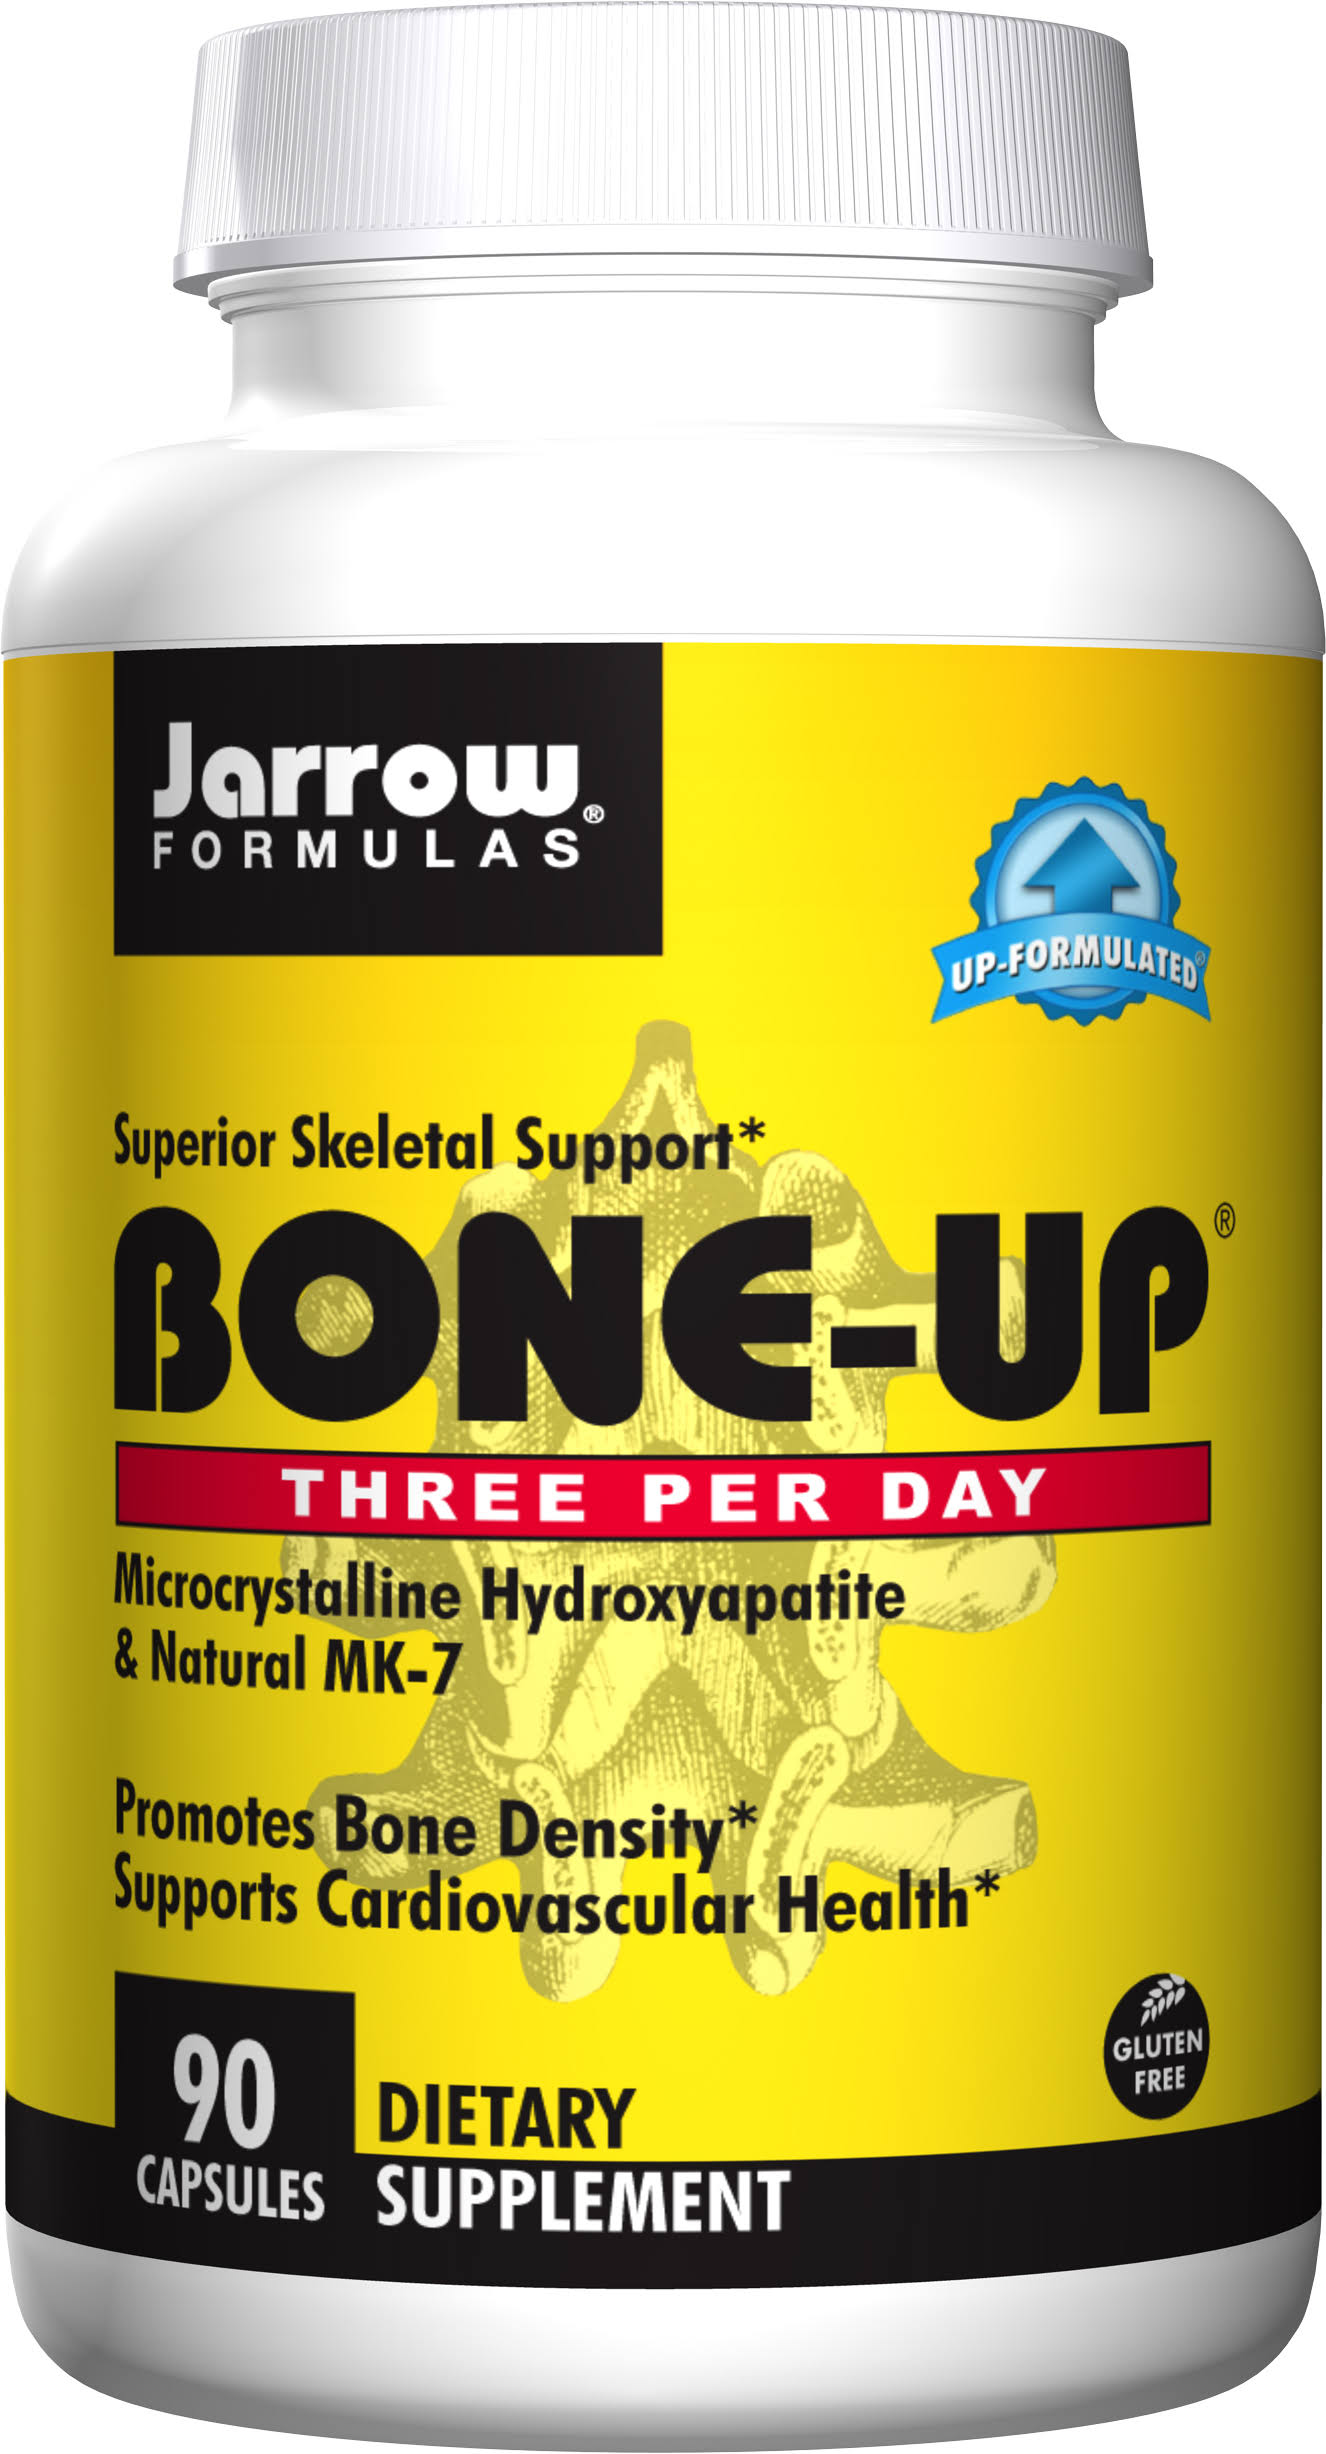 Jarrow Formulas - Bone-Up Three per Day - 90 Capsules